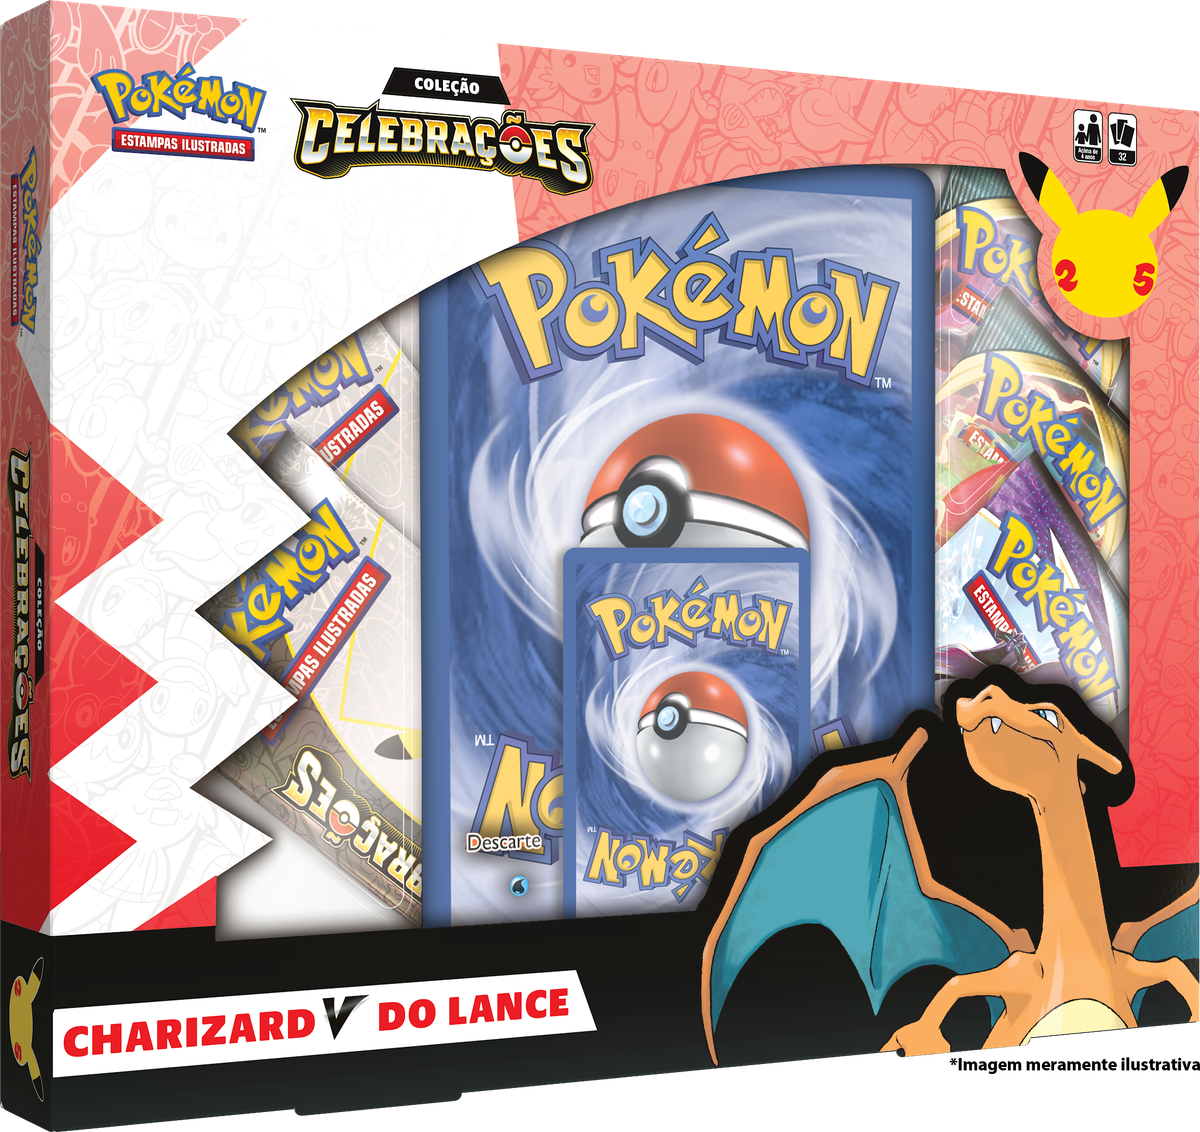 Liga Pokémon Trading Card Game de Pernambuco